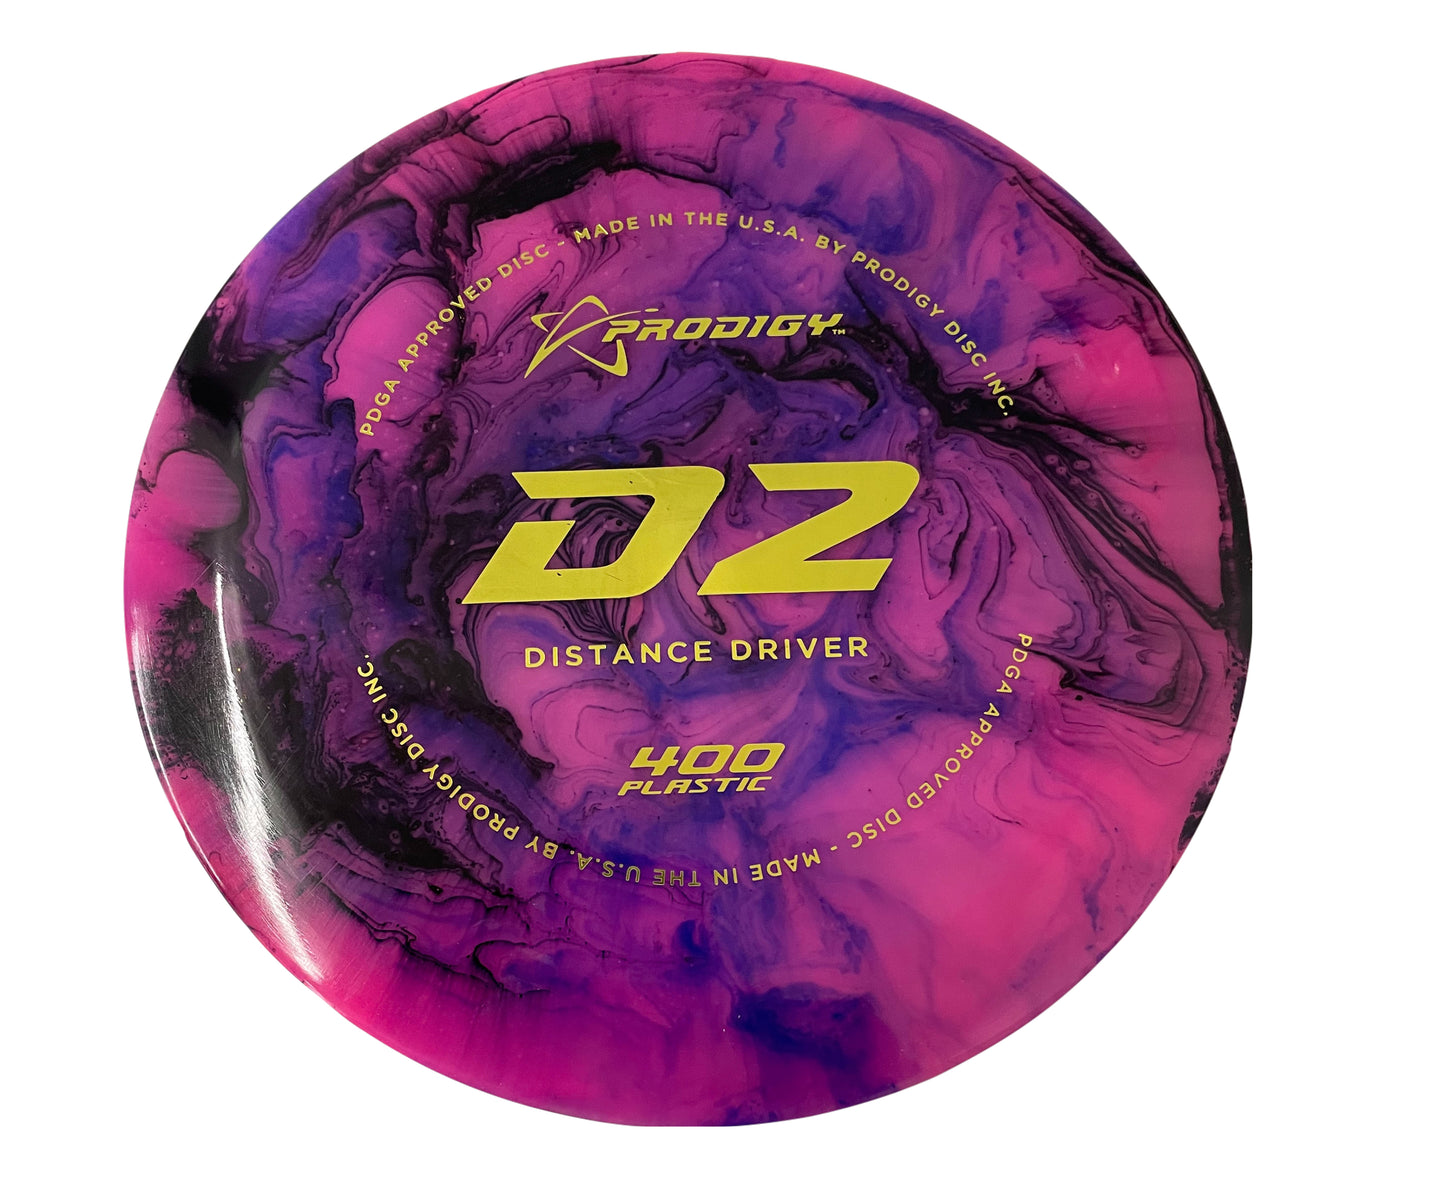 Skyhyzerdye Custom Art Disc